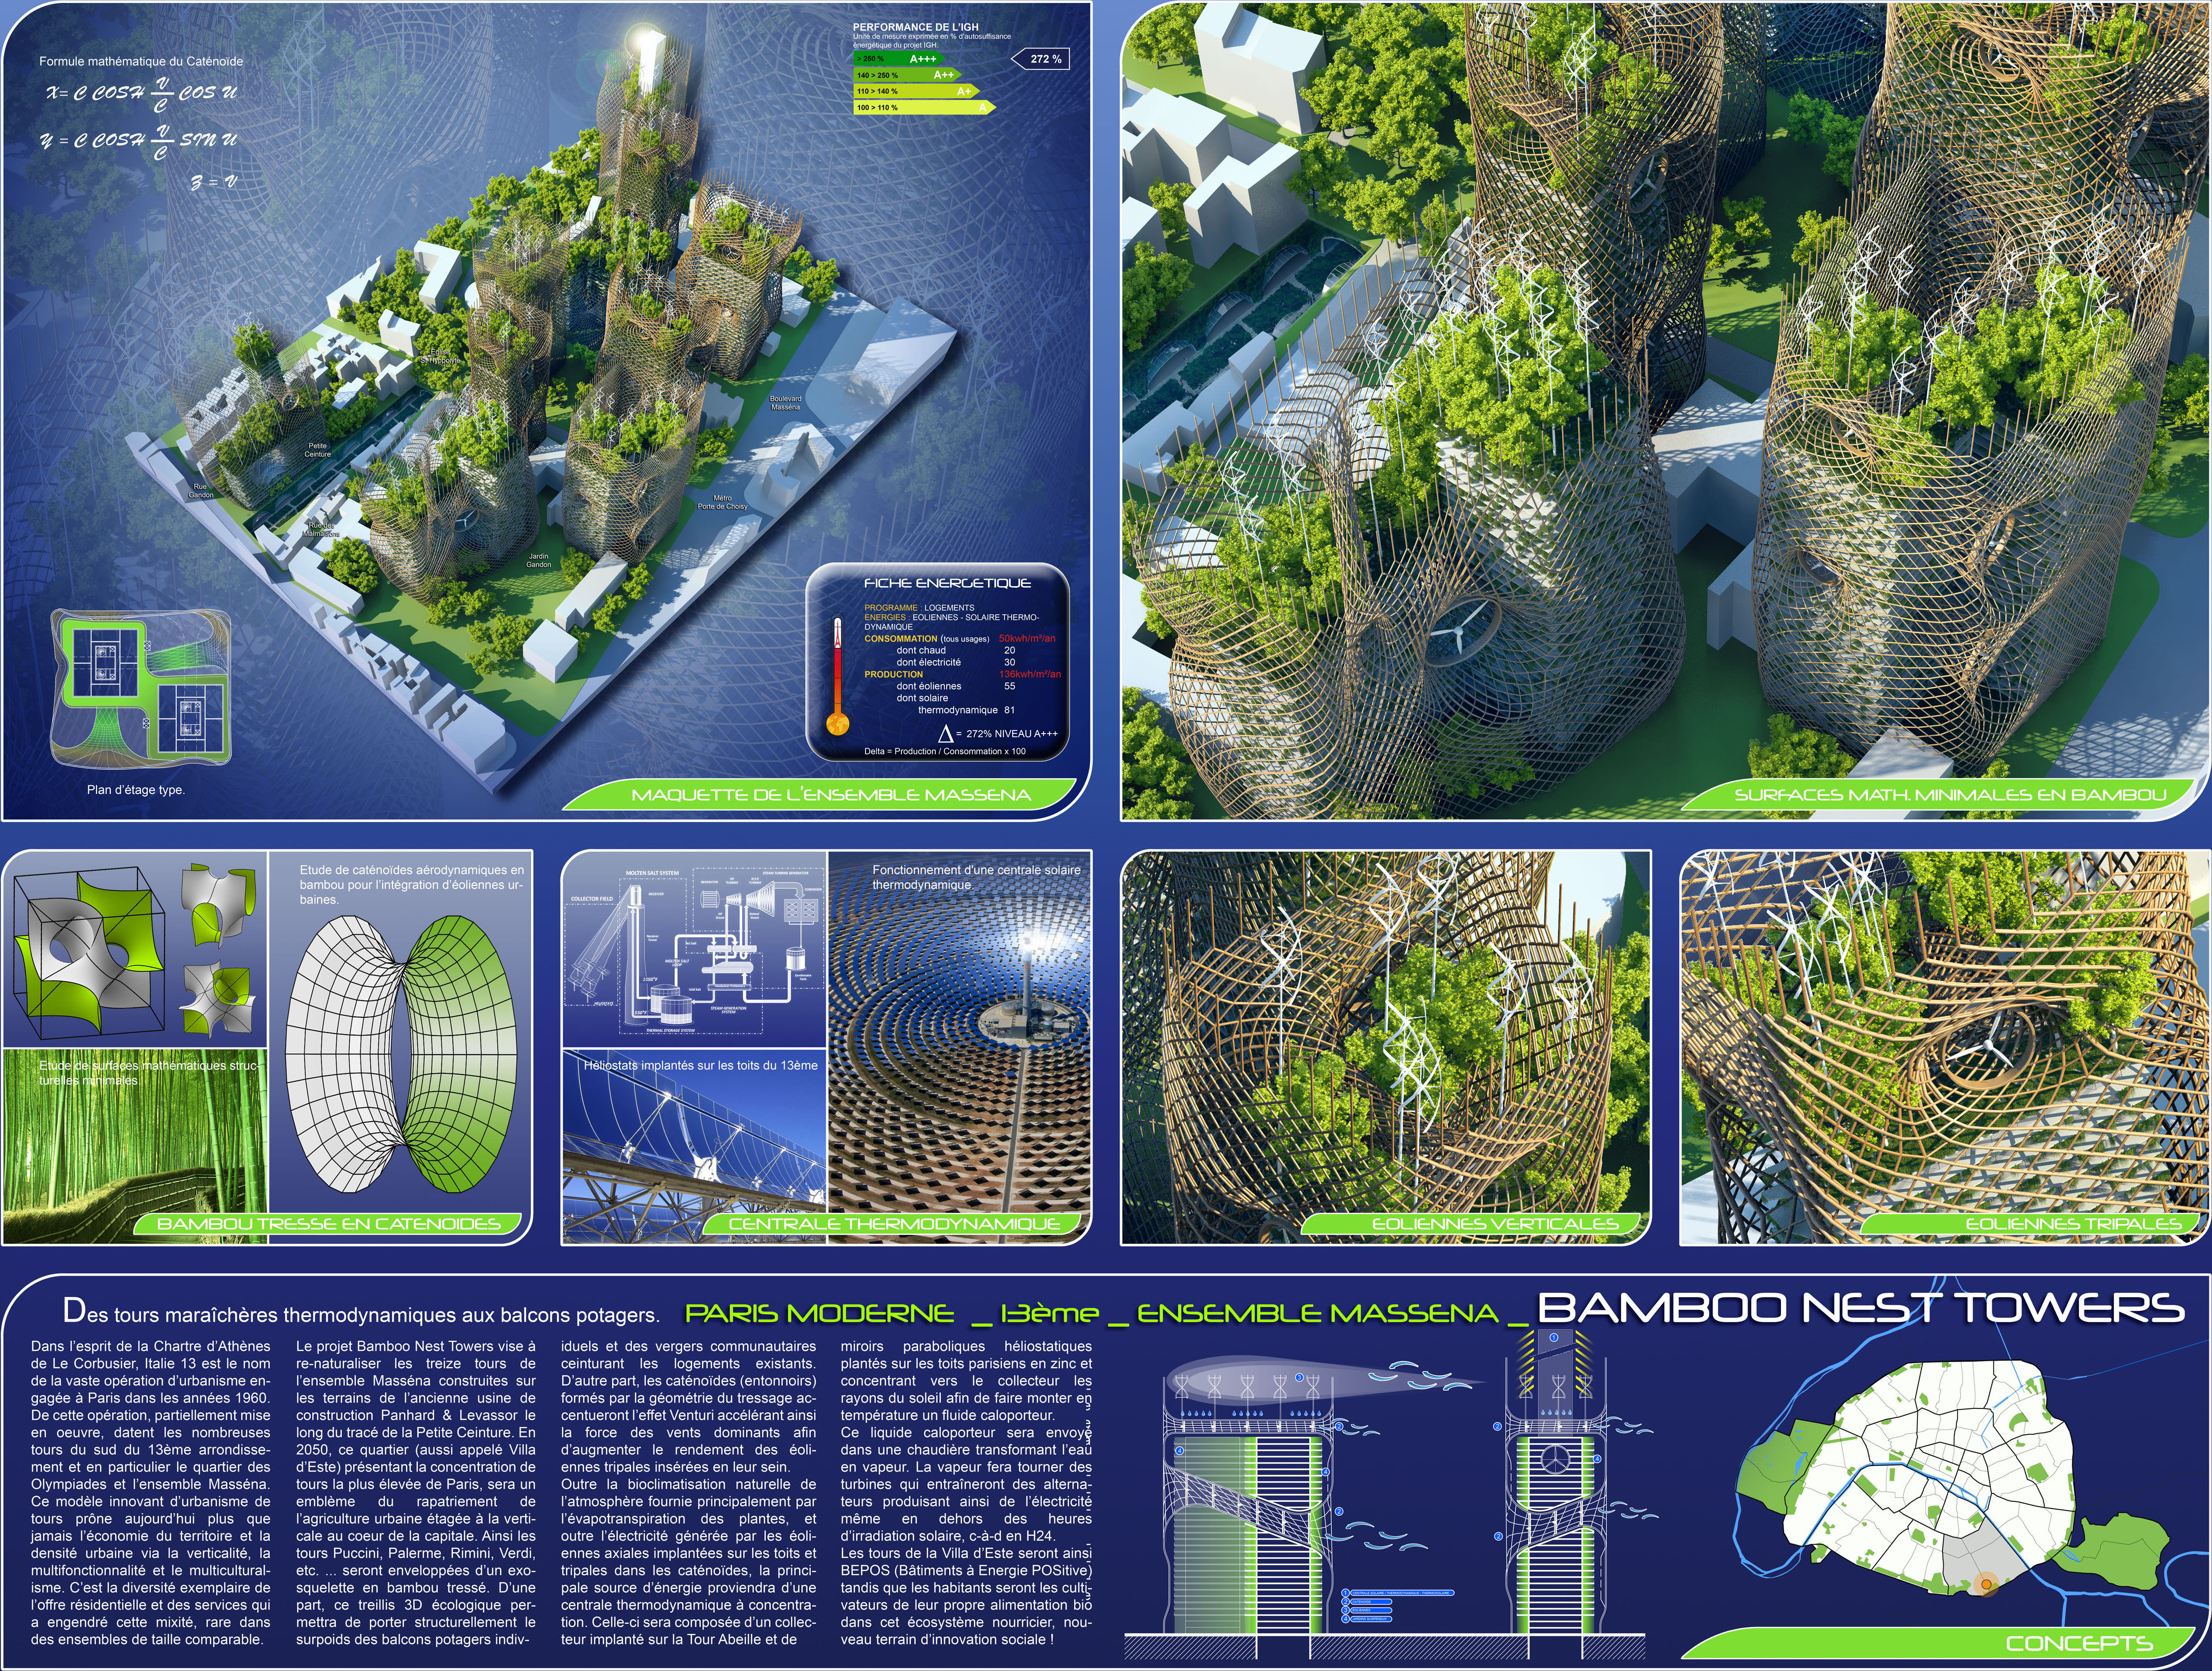 paris 2050 bamboo nest towers